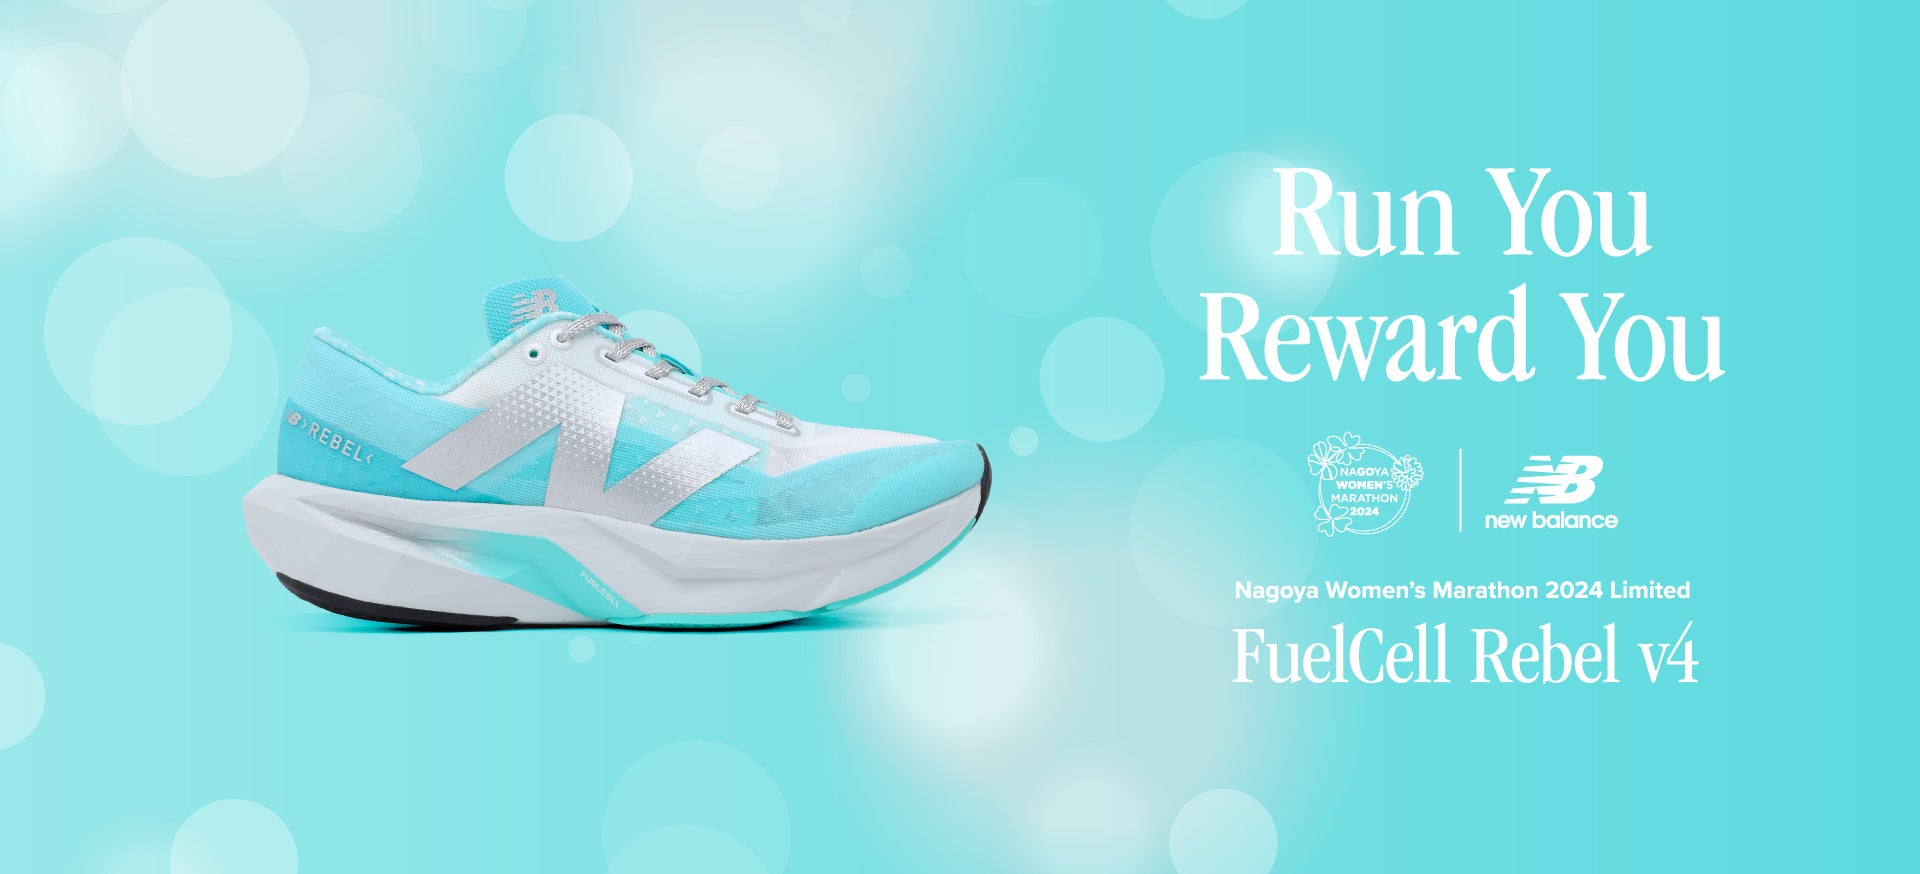 Nagoya Women's Marathon Limited Edition Shoes FuelCell Rebel v4